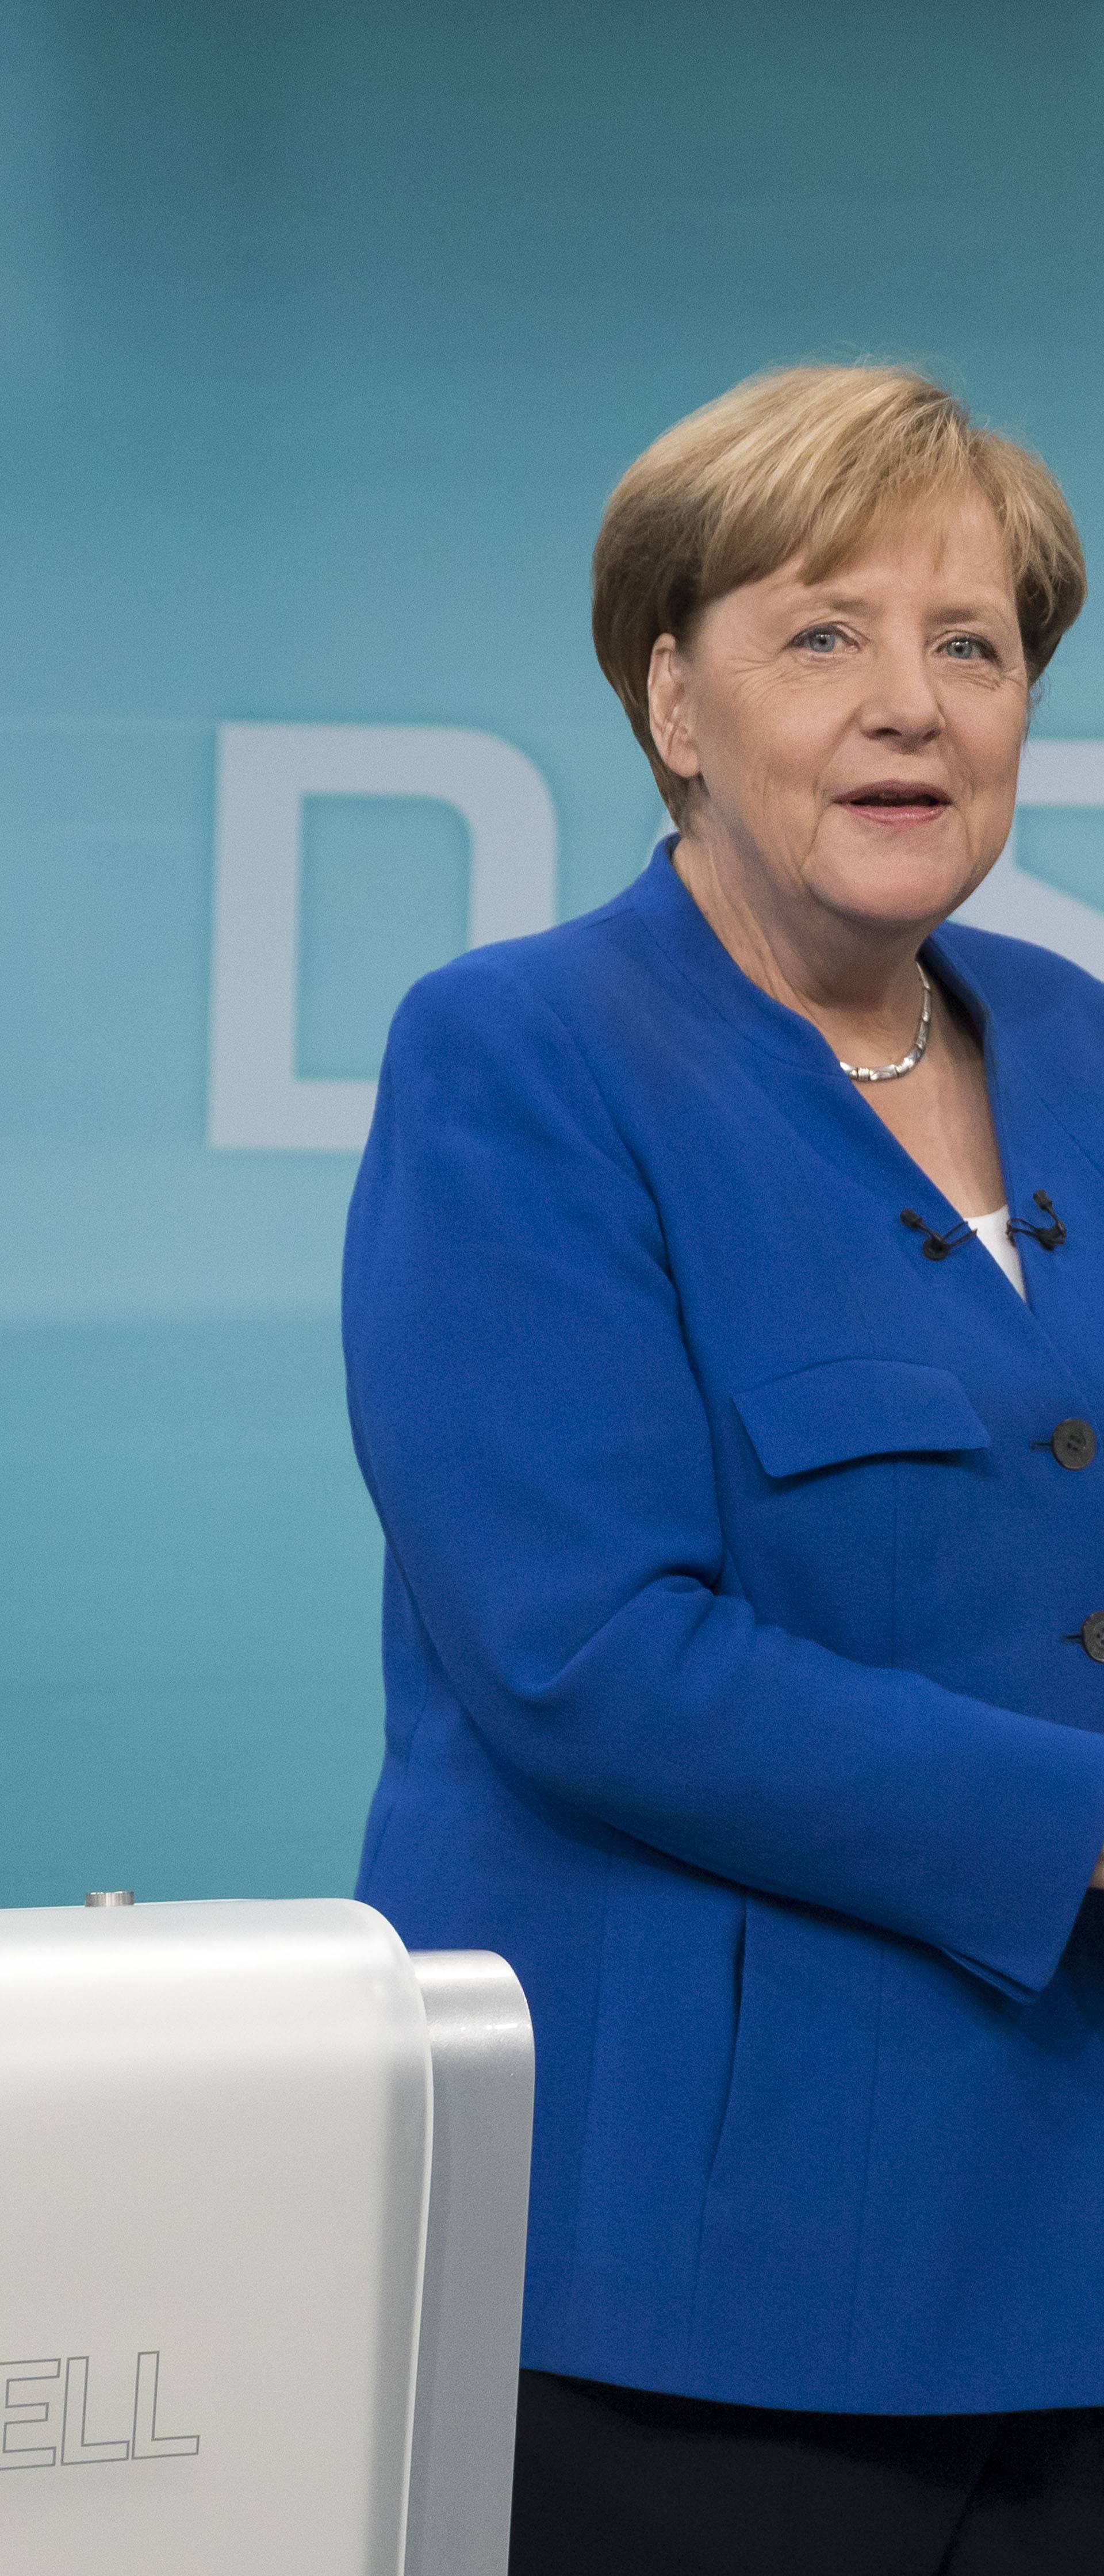 TV duel - Angela Merkel and Martin Schulz